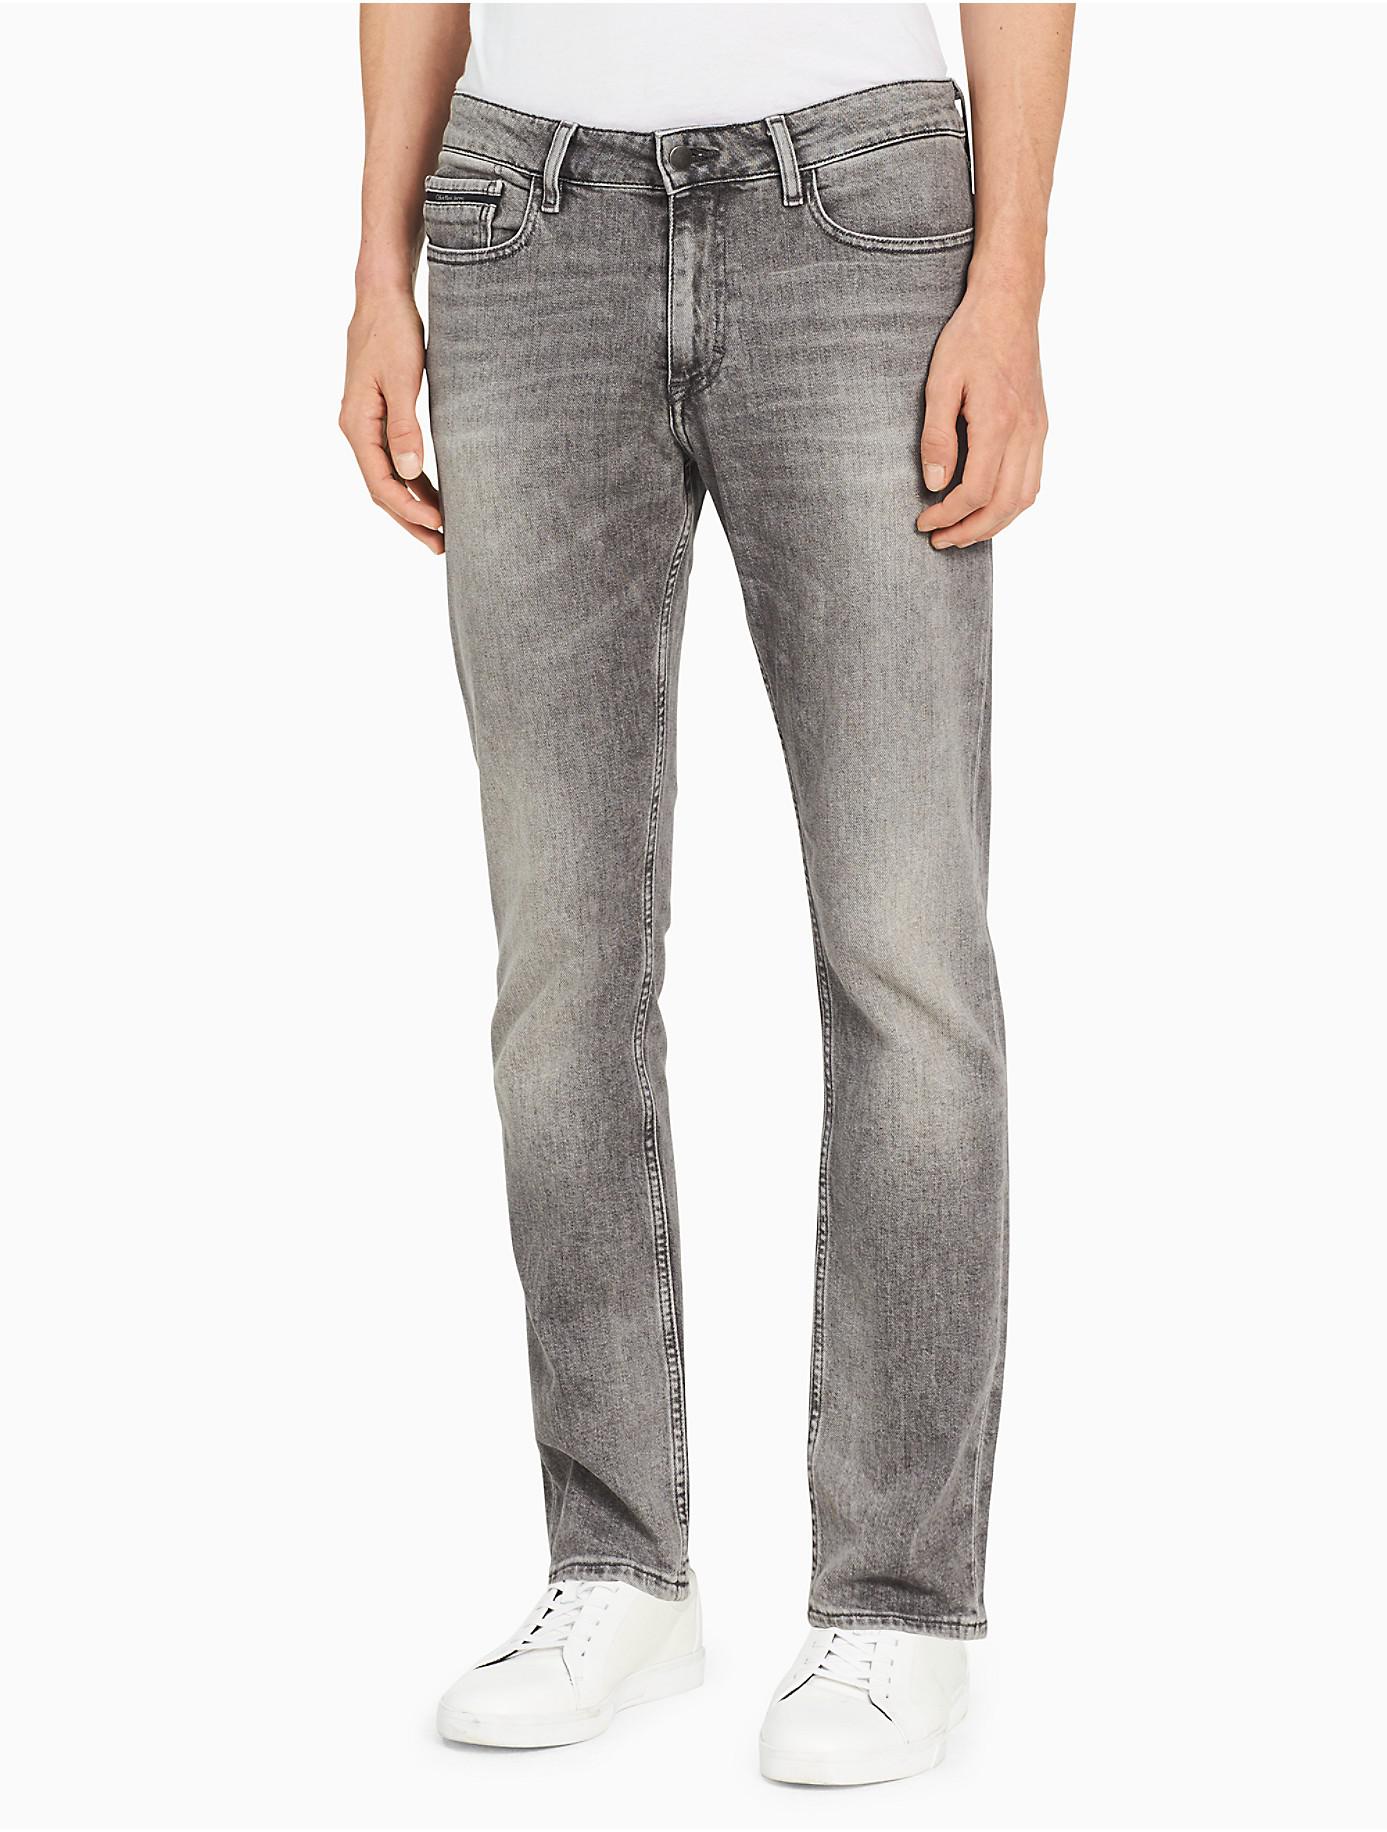 Introducir 67+ imagen calvin klein grey jeans mens